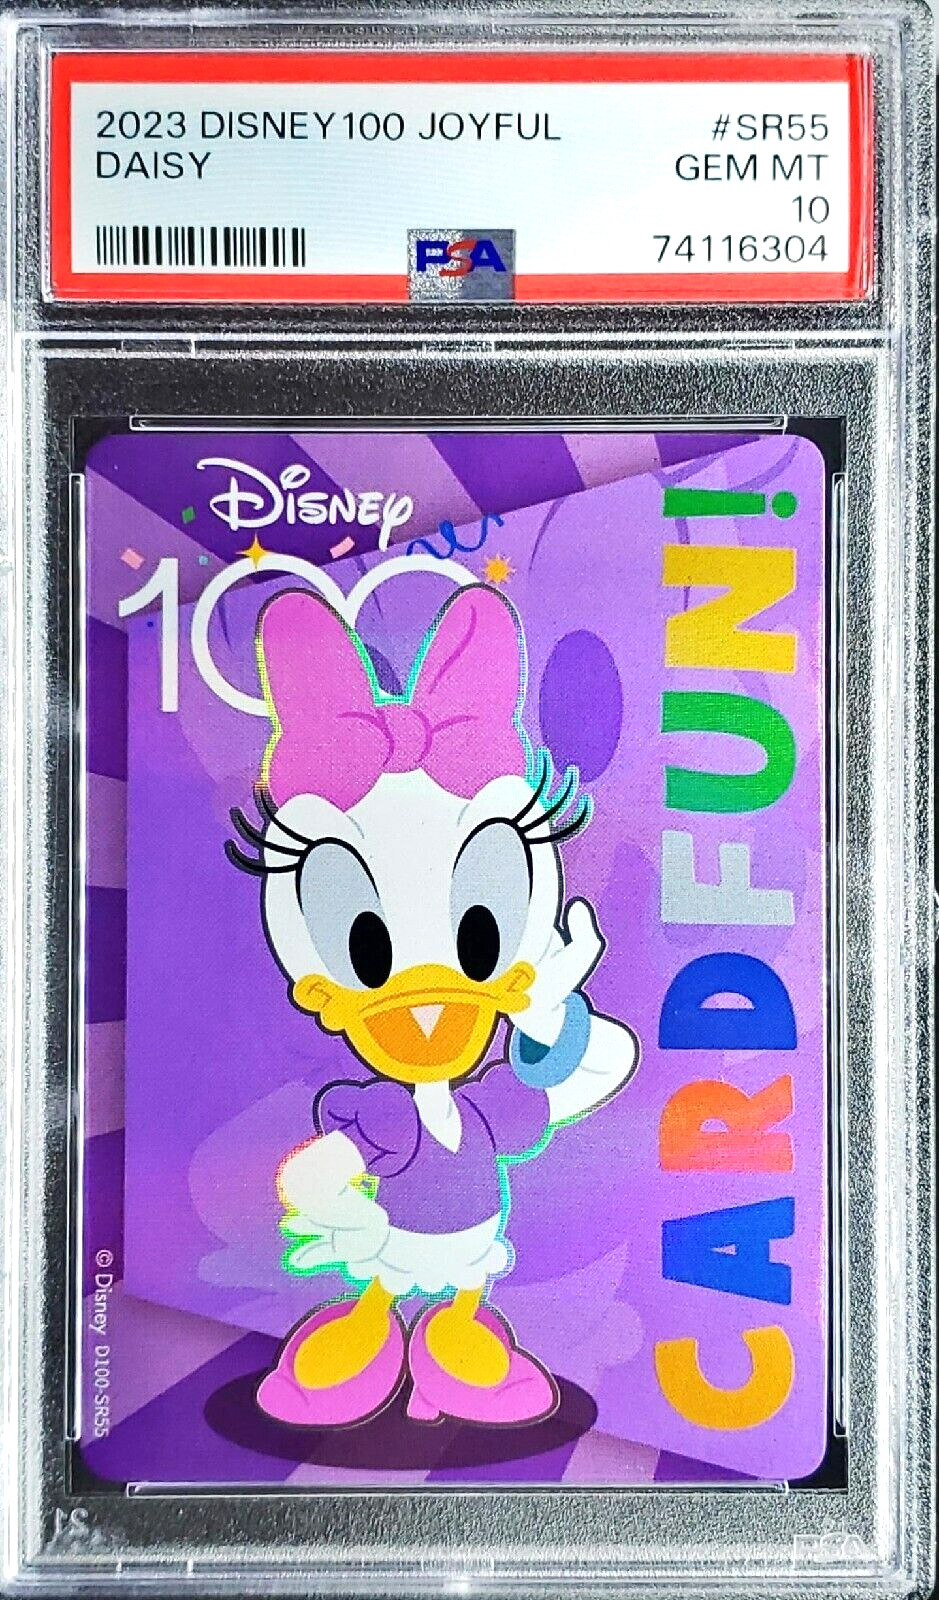 2023 Joyful Disney 100 Daisy Duck PSA 10 Gem Mint